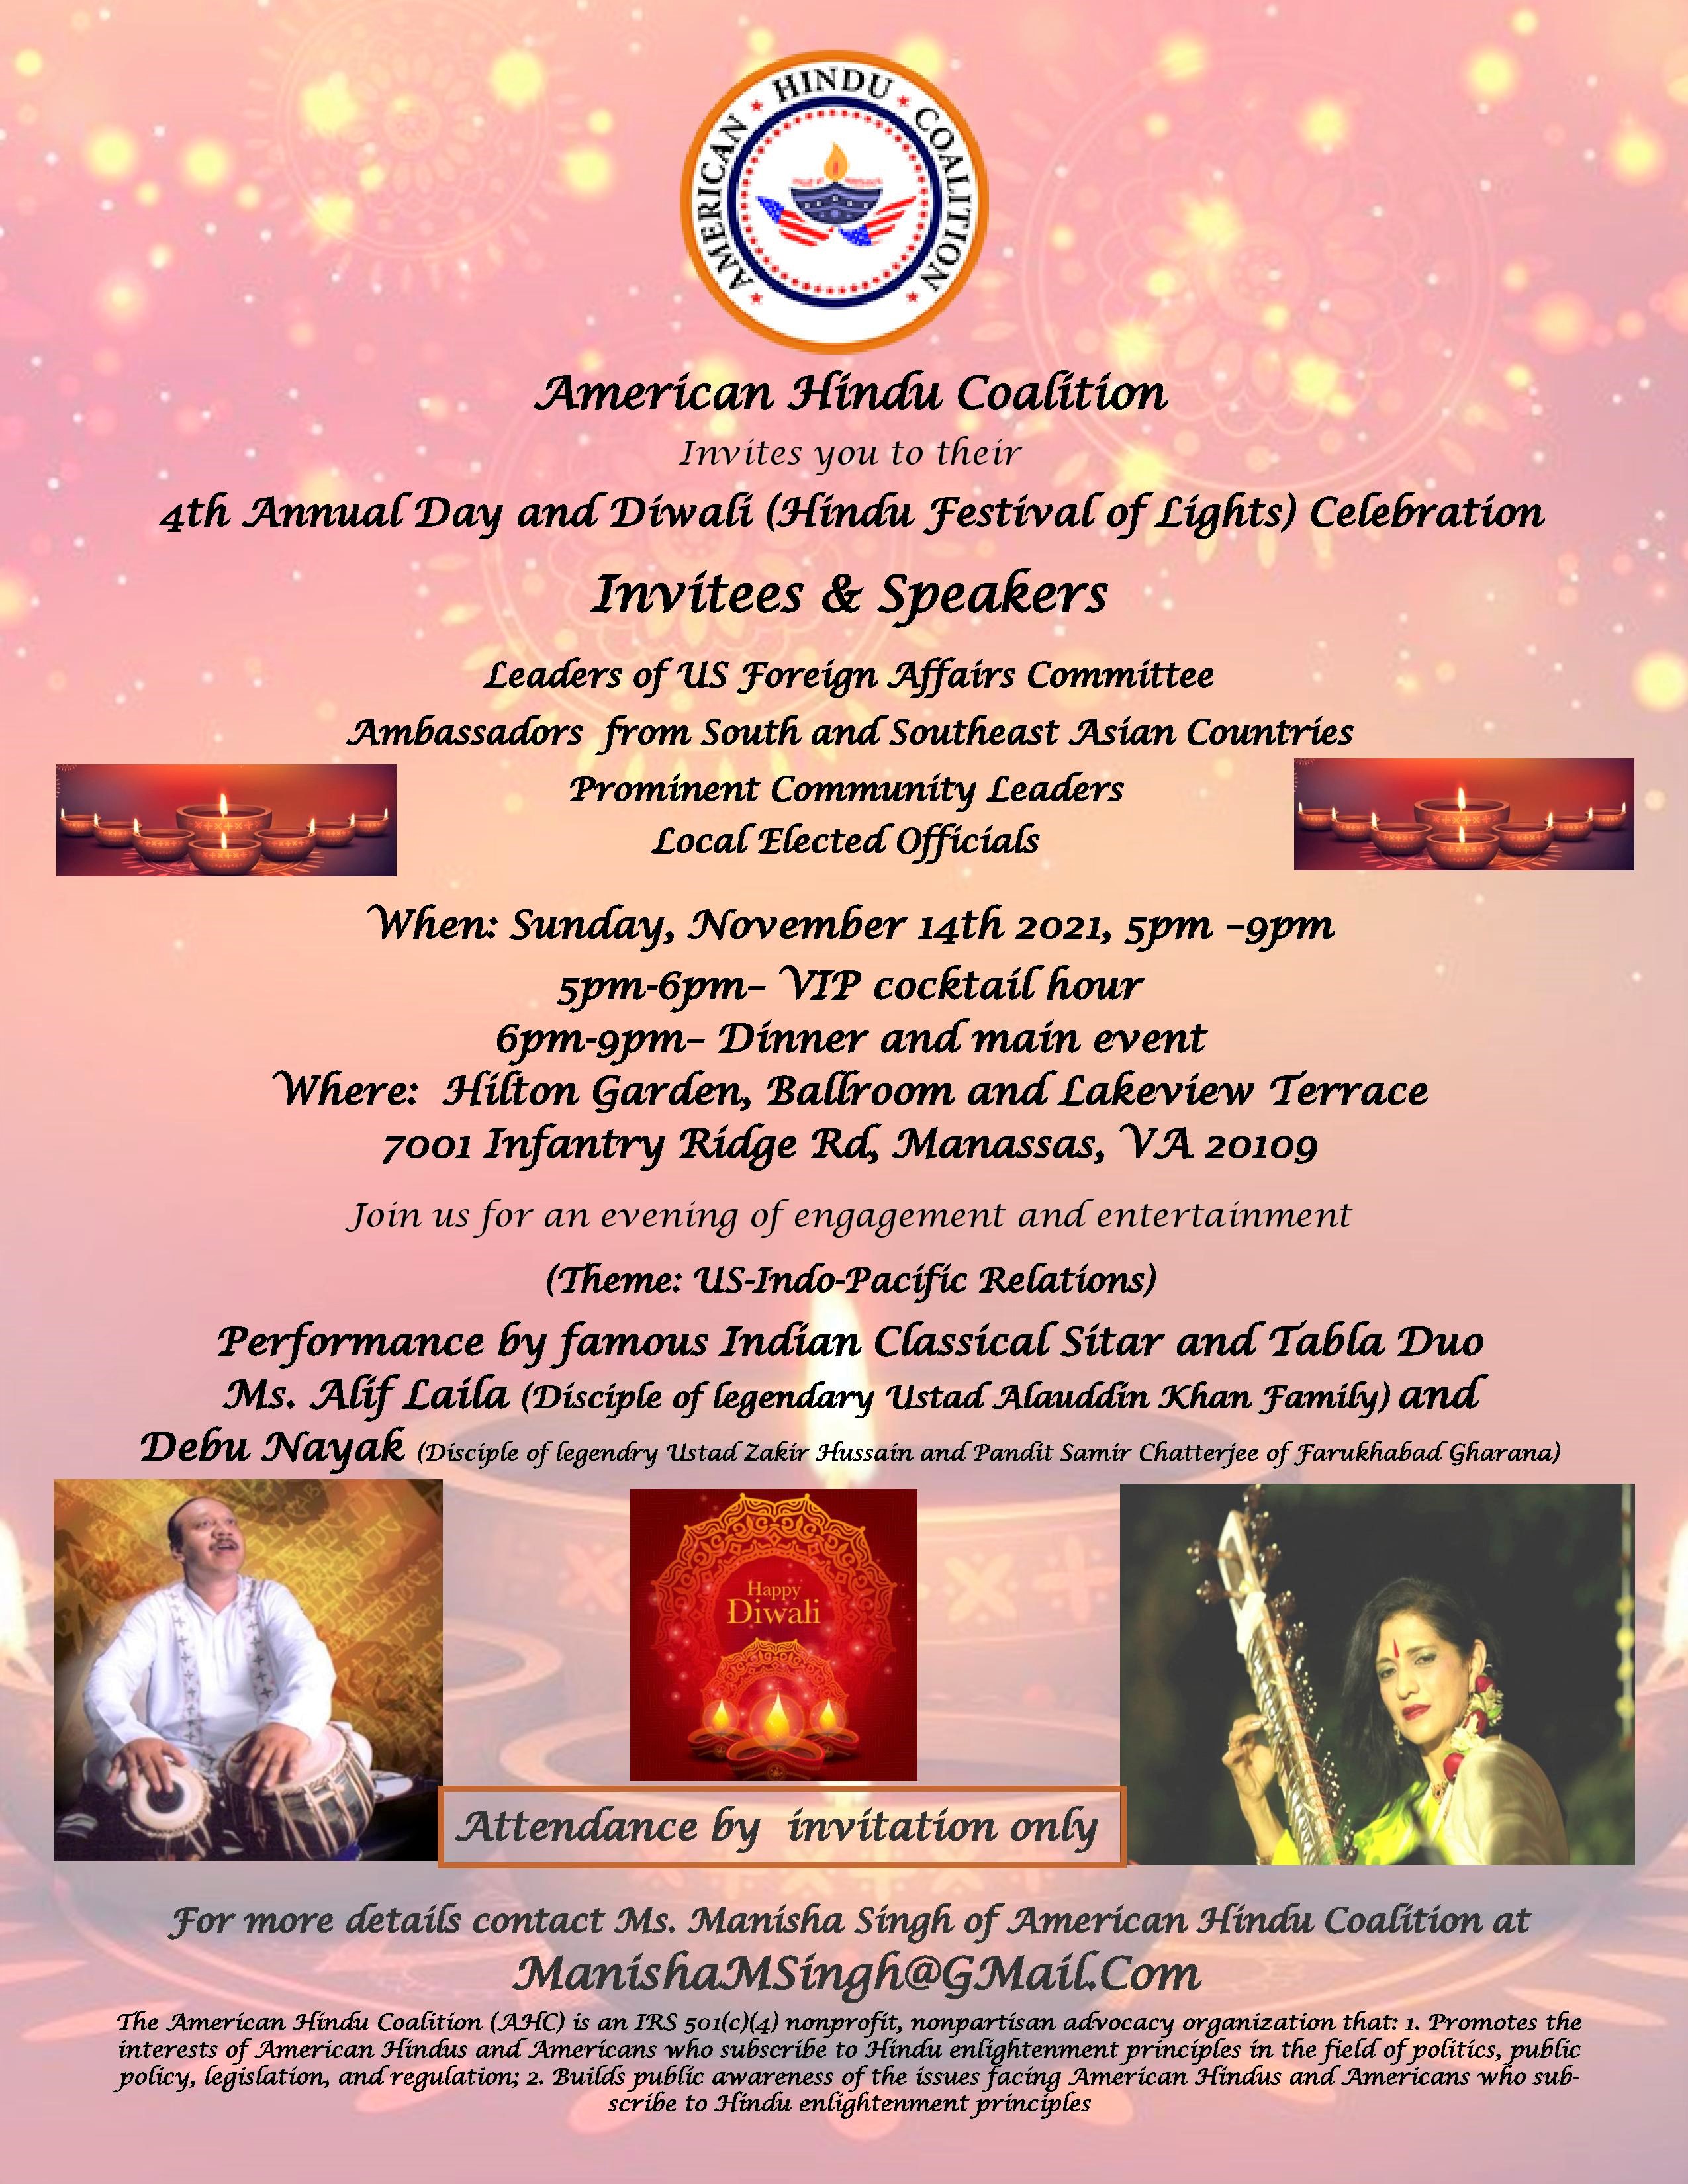 4th American Hindu Coalition Annual Day and Diwali (Hindu Festival of Lights) Celebration